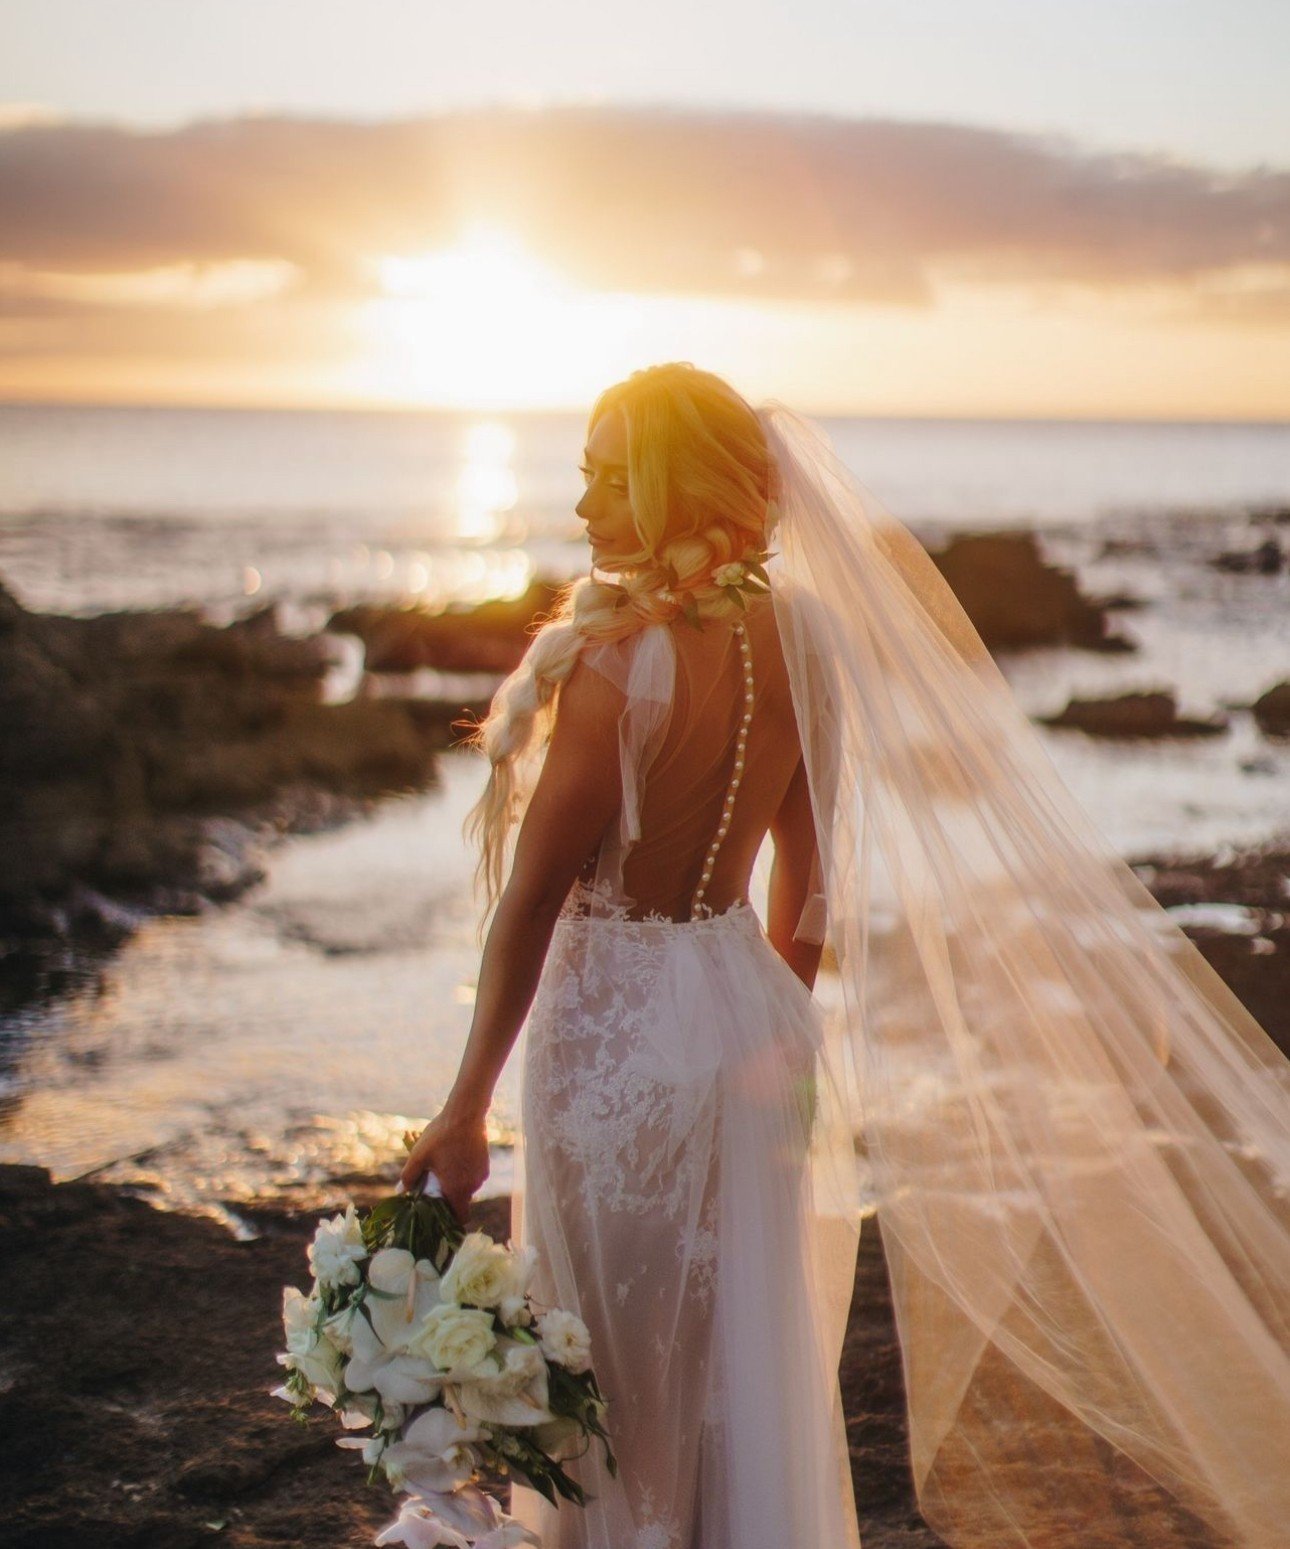 The ULTIMATE golden hour shot! 🌅✨⁠
⁠
📸 @taimanephotography⁠
.⁠
.⁠
.⁠
#loveletterweddings #LLW #destinationweddingplanner #destinationwedding #hawaiiweddingplanner #hawaiiwedding #oahuweddingplanner #oahuwedding #tropicalwedding #colorfulwedding #we